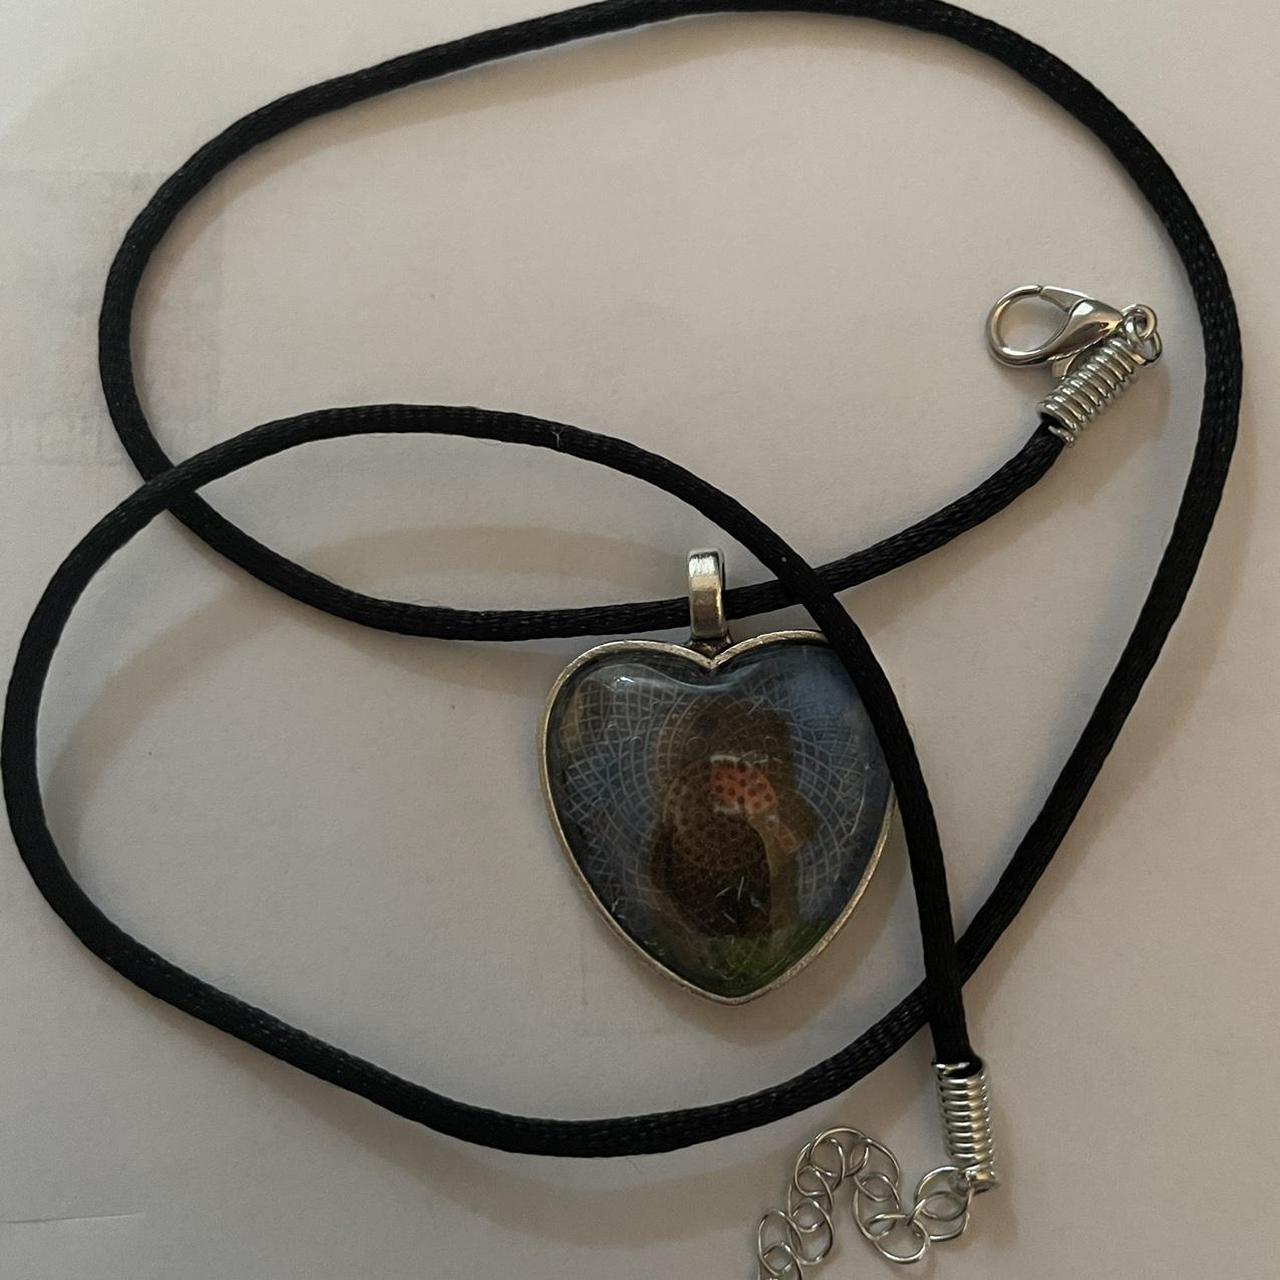 Domo heart necklace made by me! #domo #domonecklace - Depop